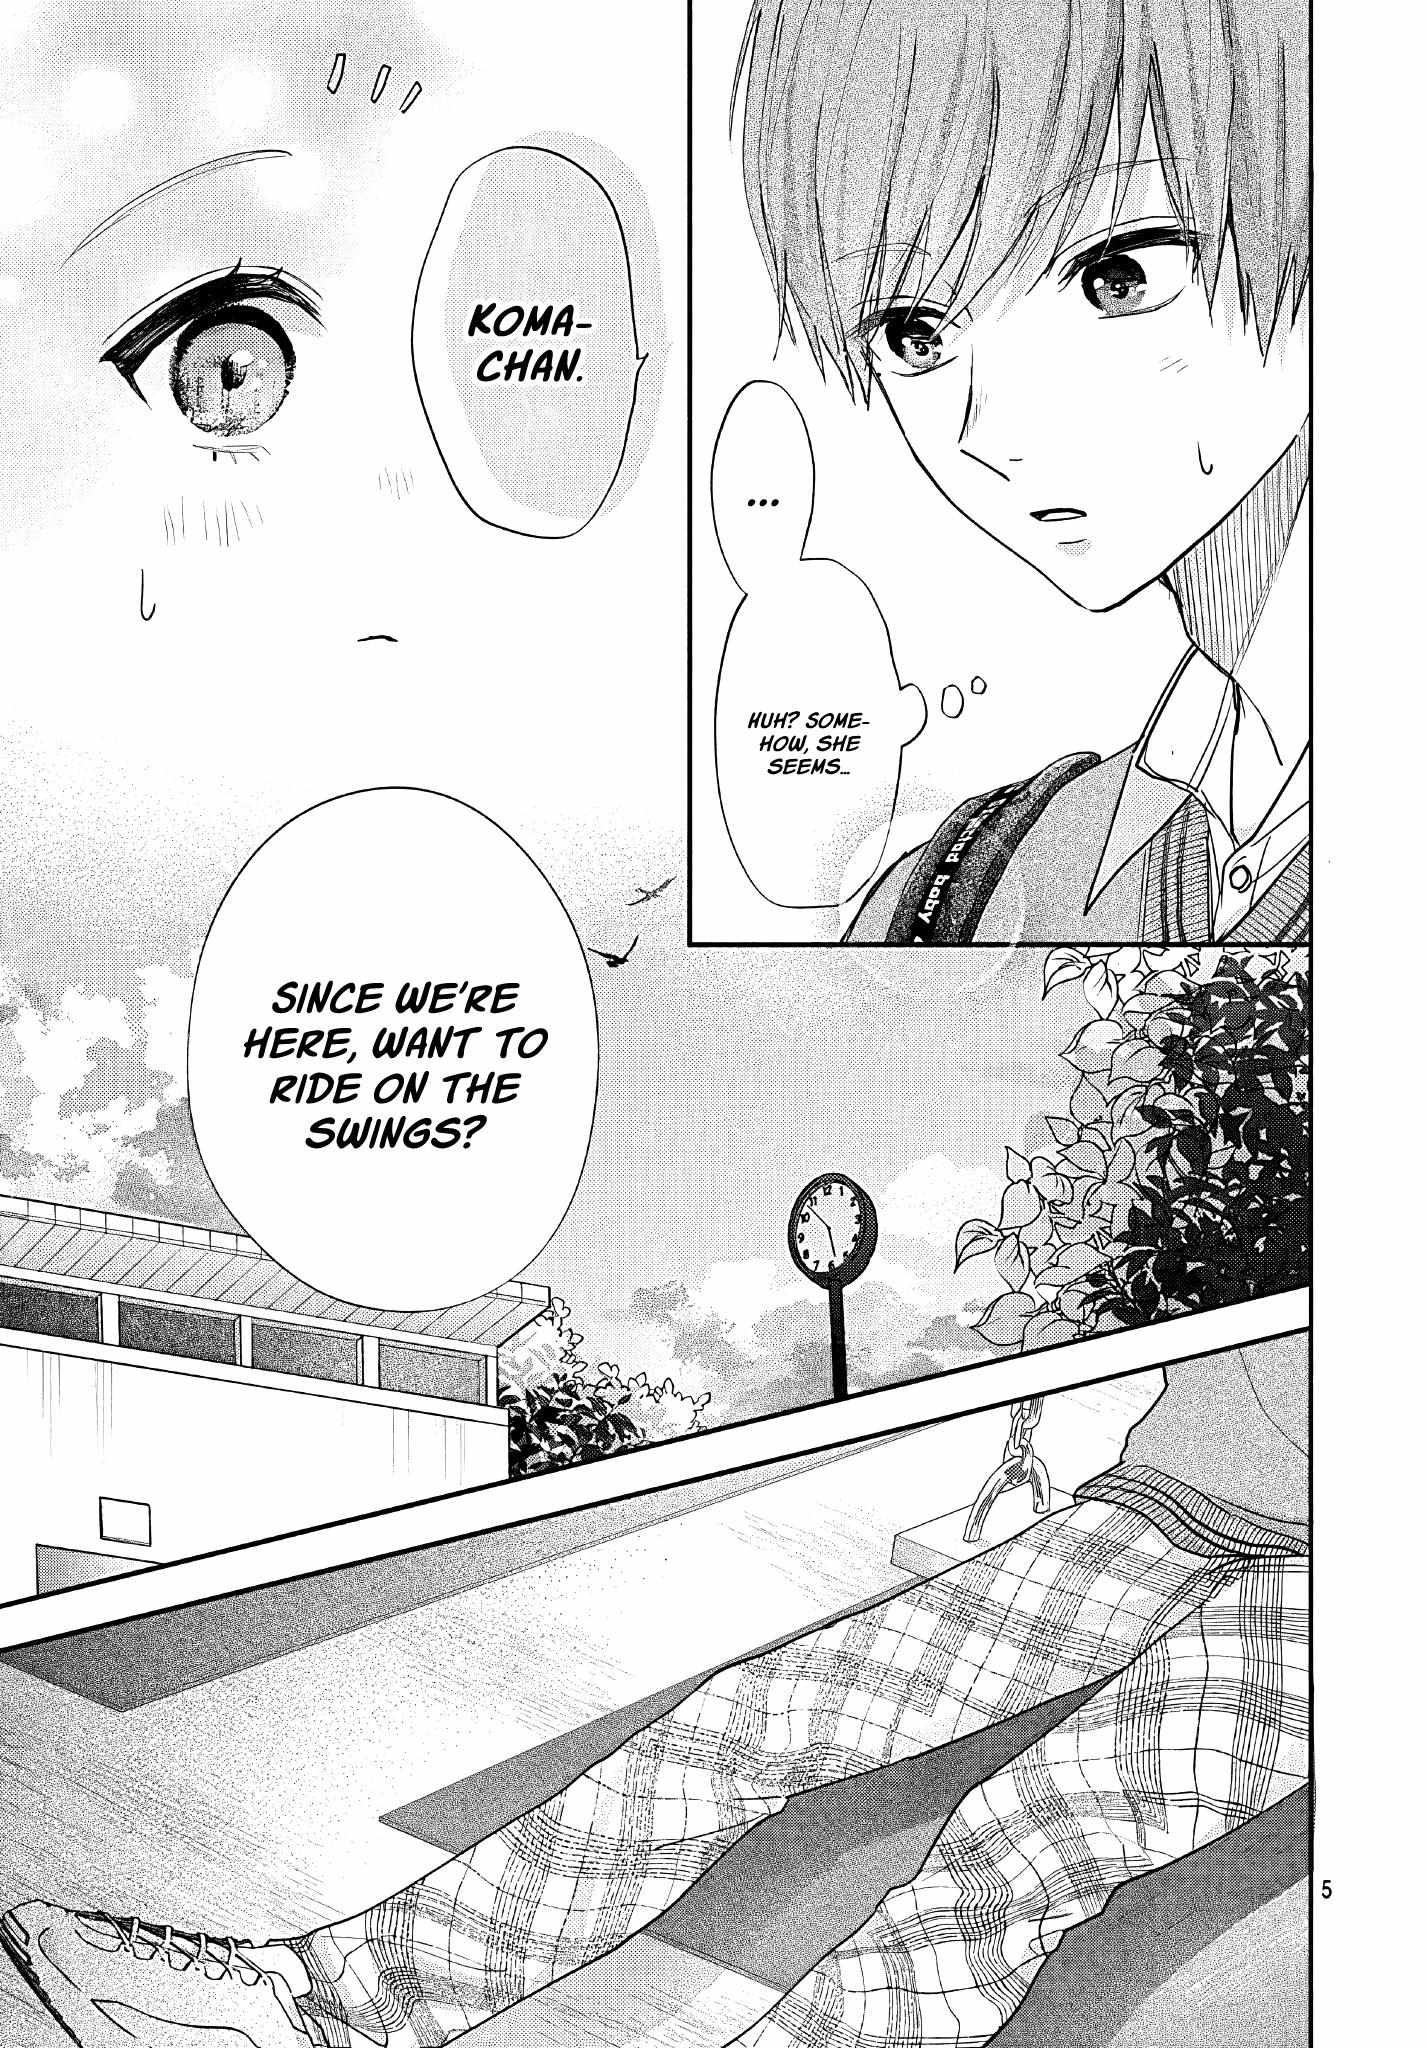 I Hate Komiyama - 11 page 6-15df8d03